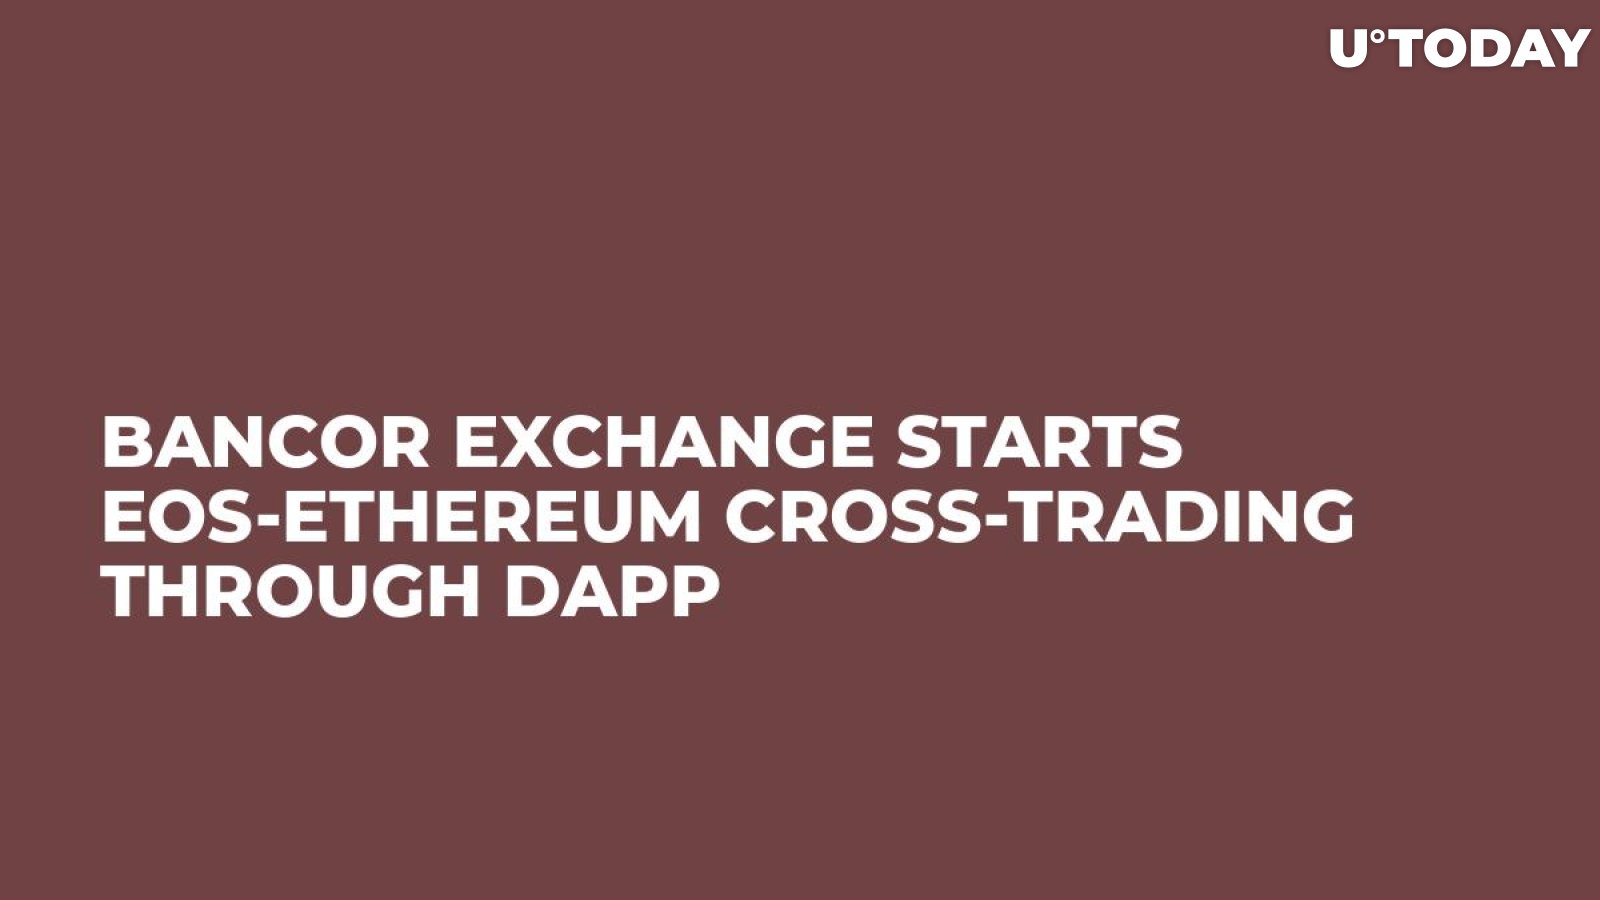 Bancor Exchange Starts EOS-Ethereum Cross-Trading Through DApp